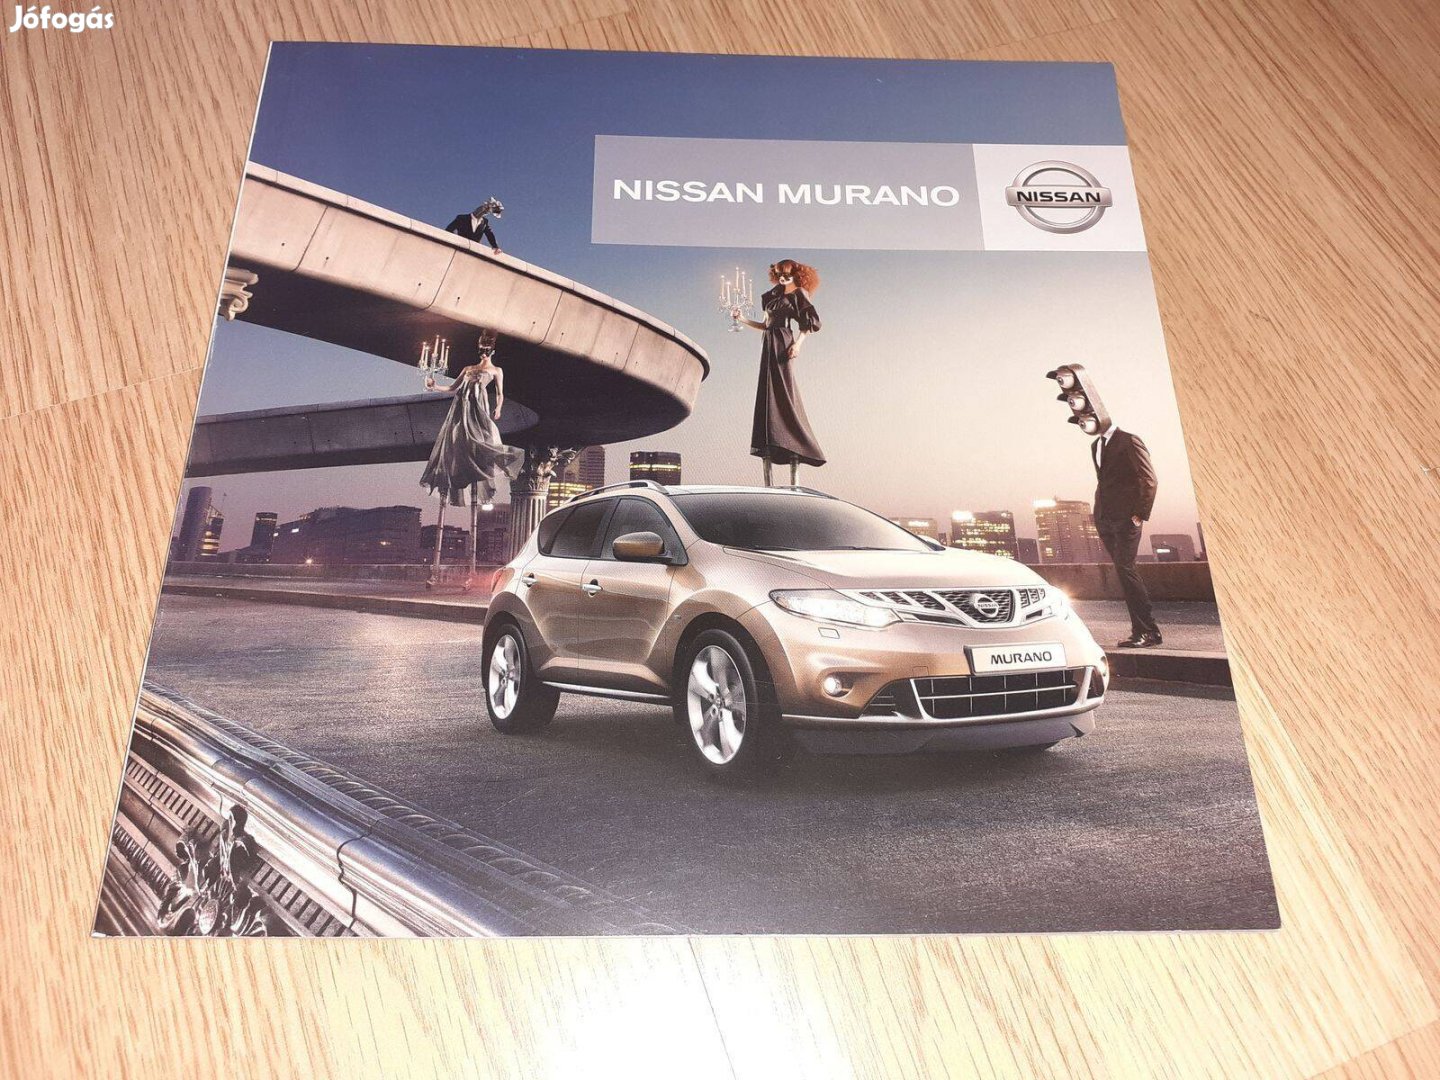 Nissan Murano prospektus - 2011, magyar nyelvű